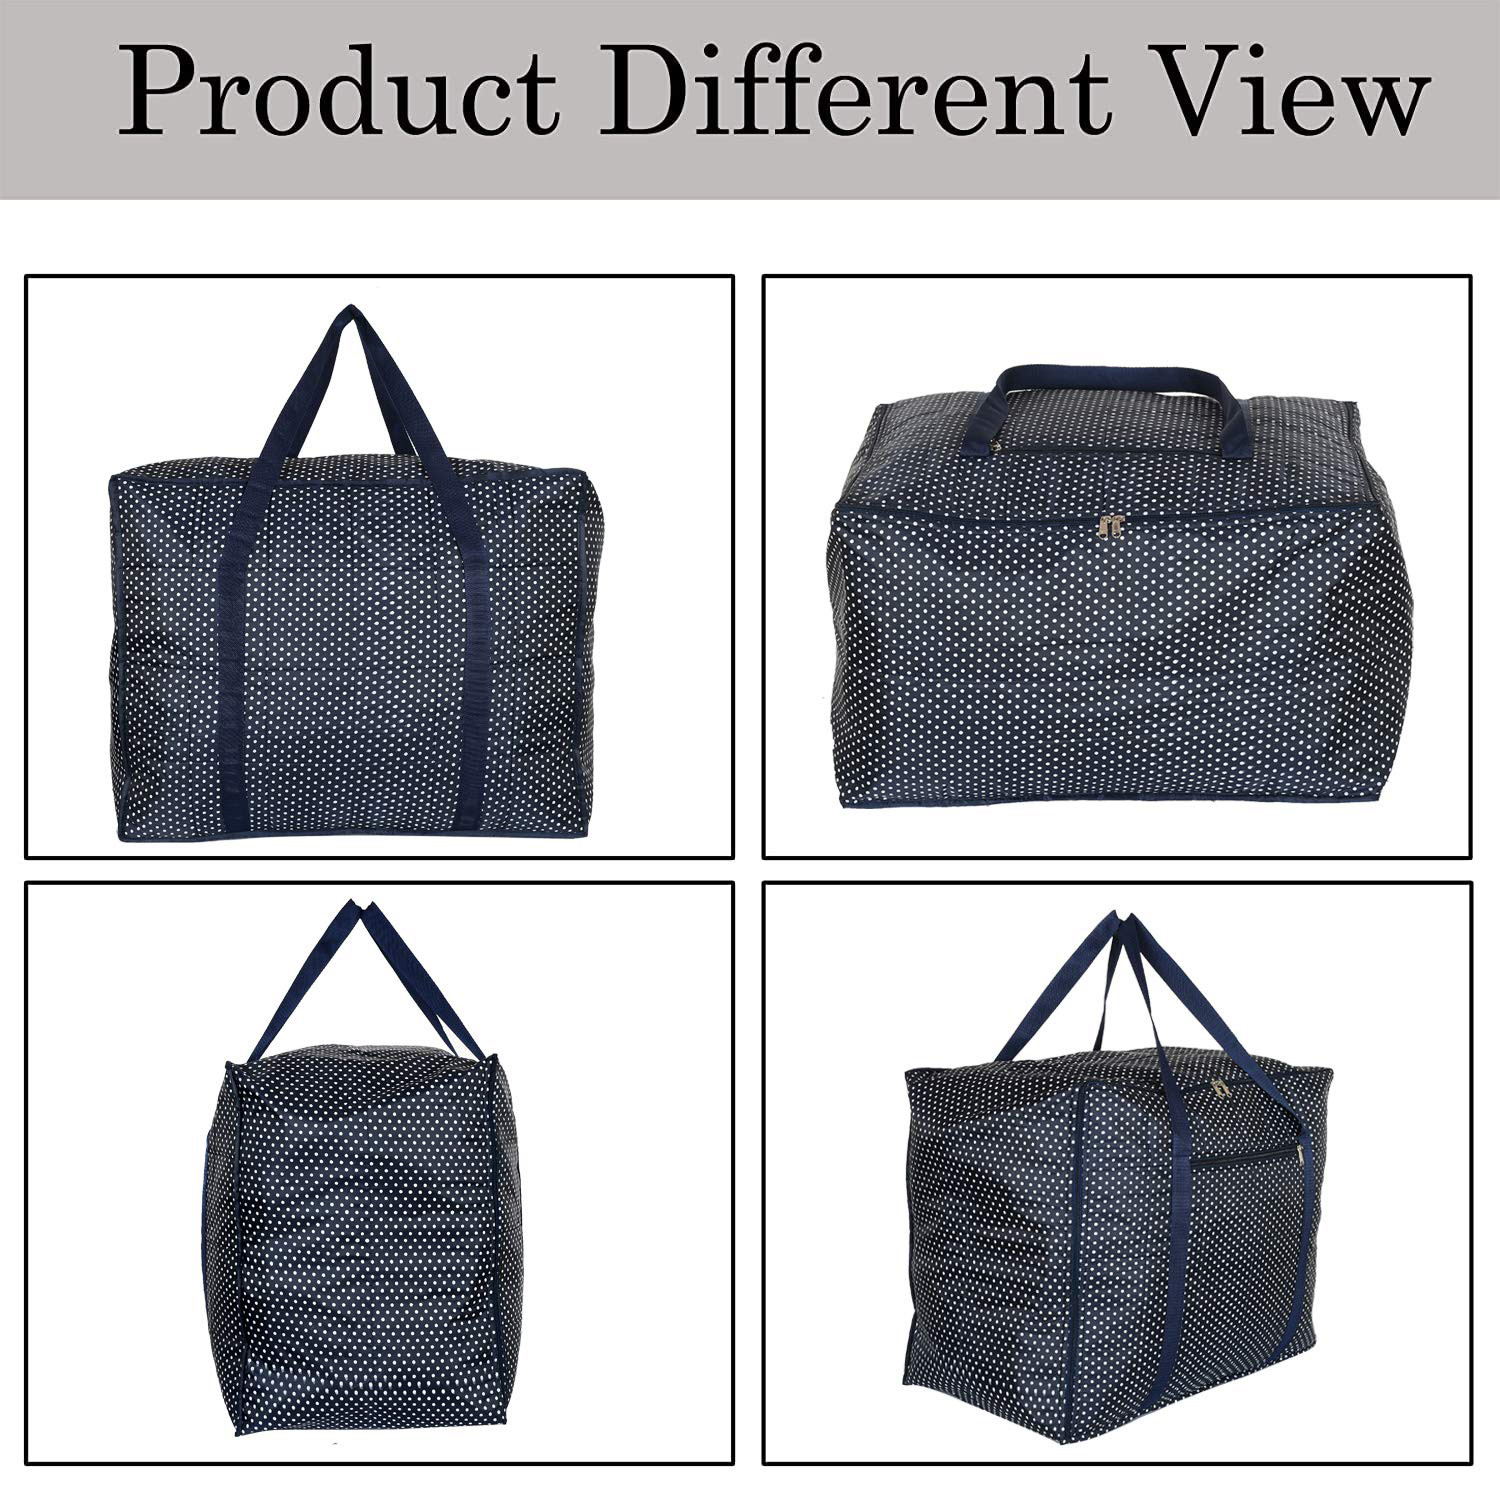 Kuber Industries Travel Duffle Bag For Women Men|Dot Print Large Size Underbed Storage Bag|Polyester Waterproof Wardrobe Organizer (Blue)